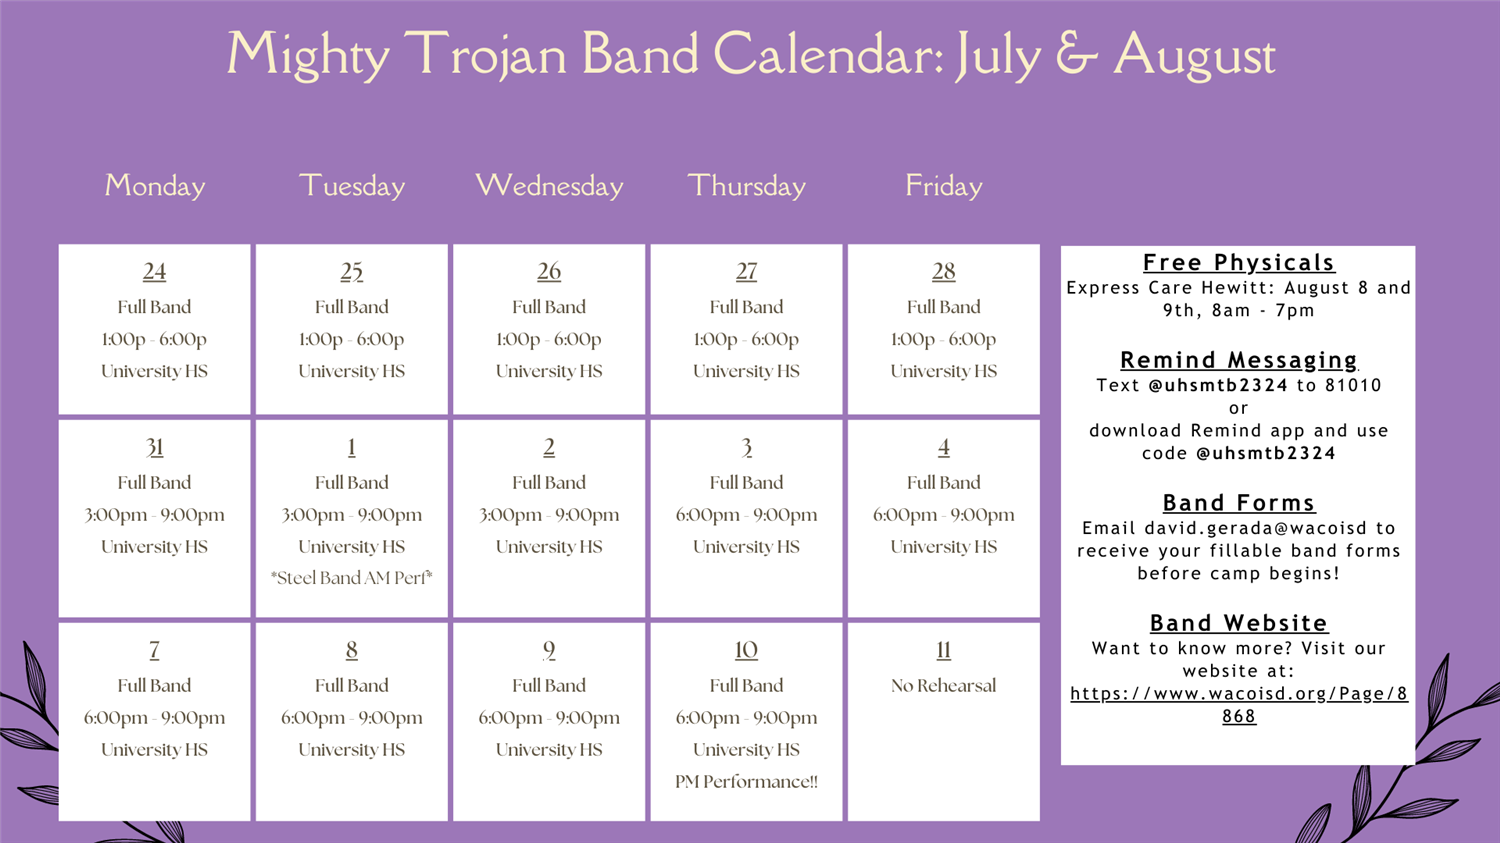 Band Calendar: A Harmonious Journey Through Events and Music